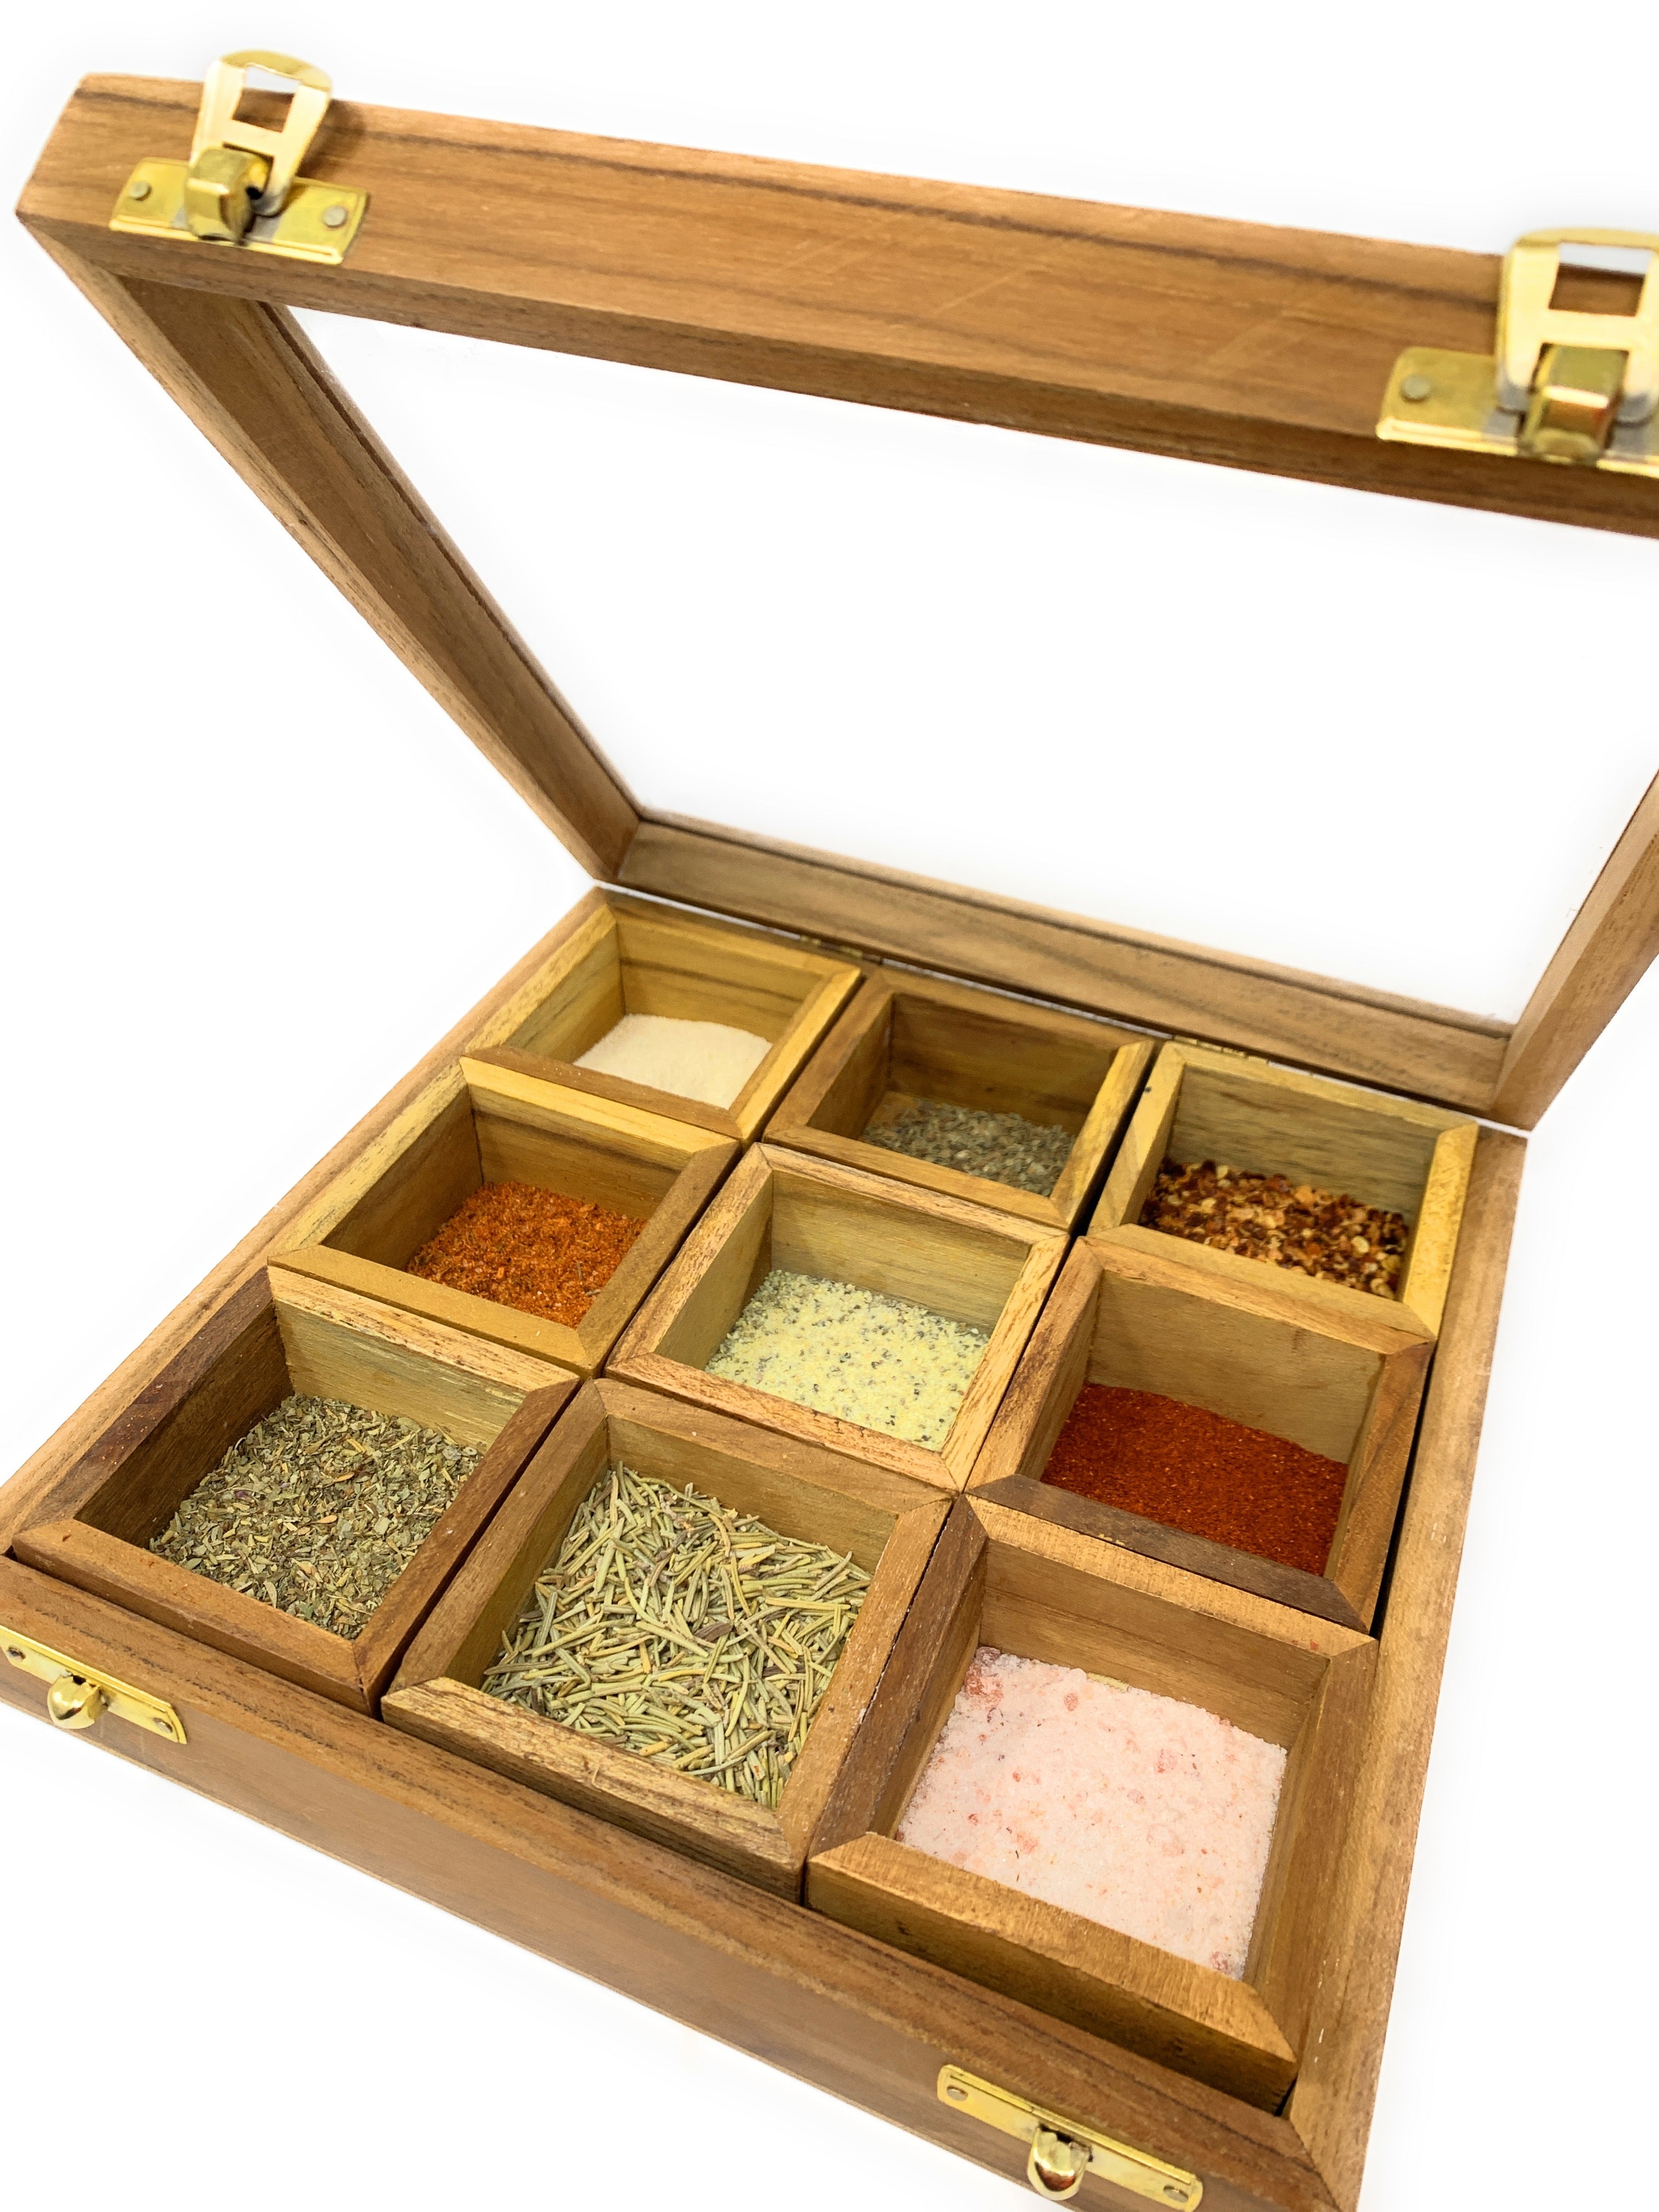 Utililty spice box Wooden spice organizer Space saving spice organizin ...